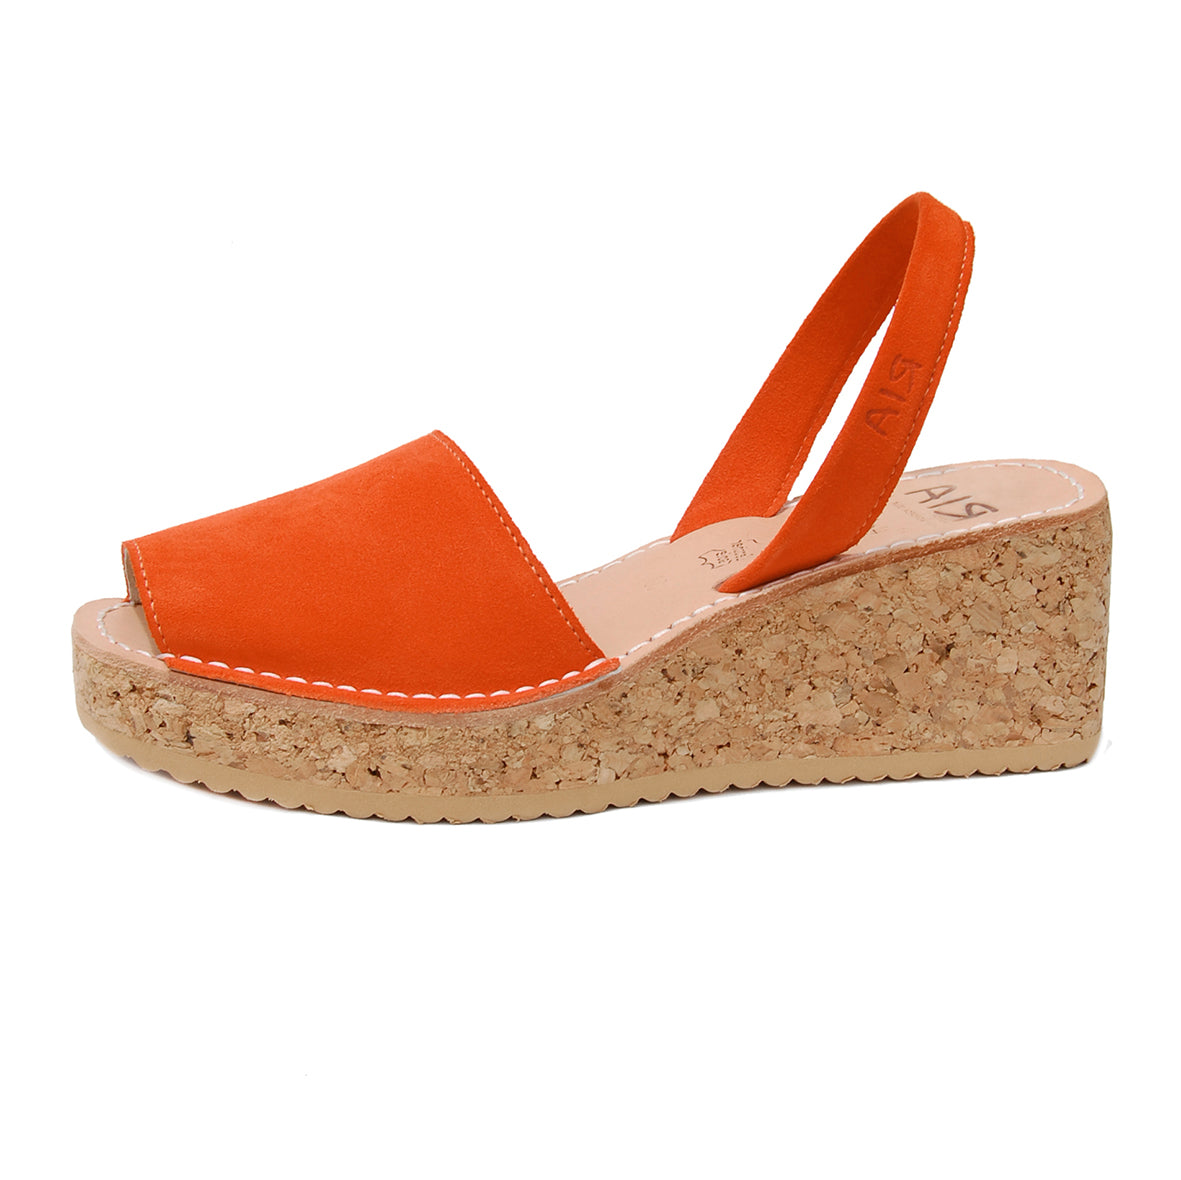 Spanish Shoe with Cork heel in bright Orange